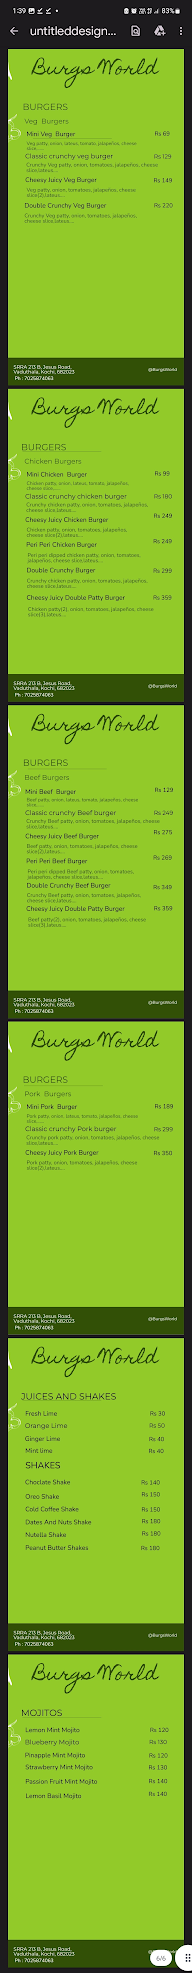 Burgs World menu 2